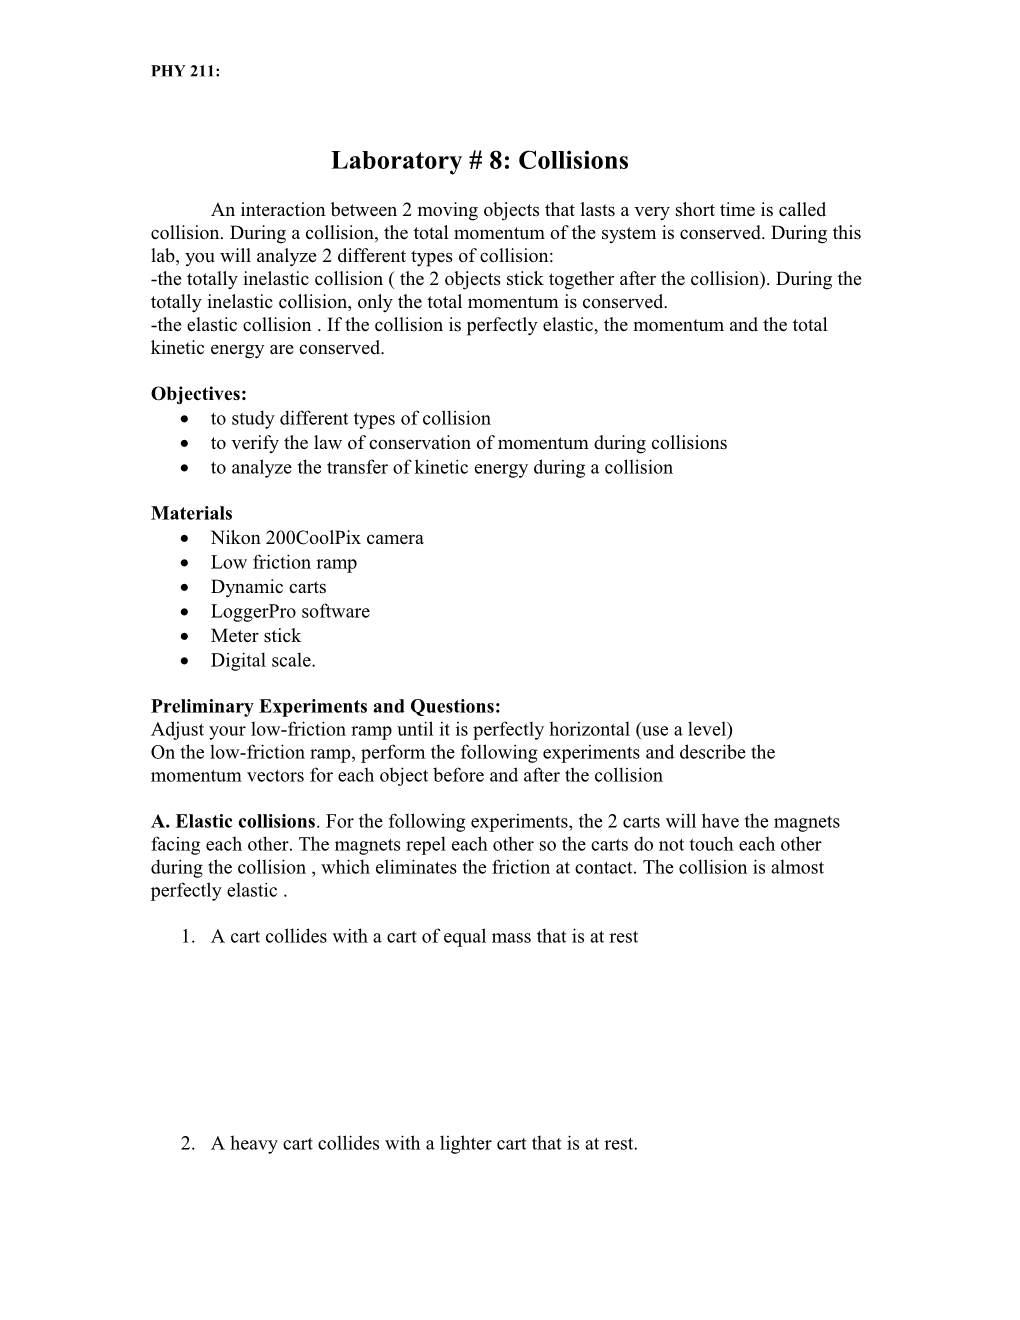 Laboratory # 8: Collisions